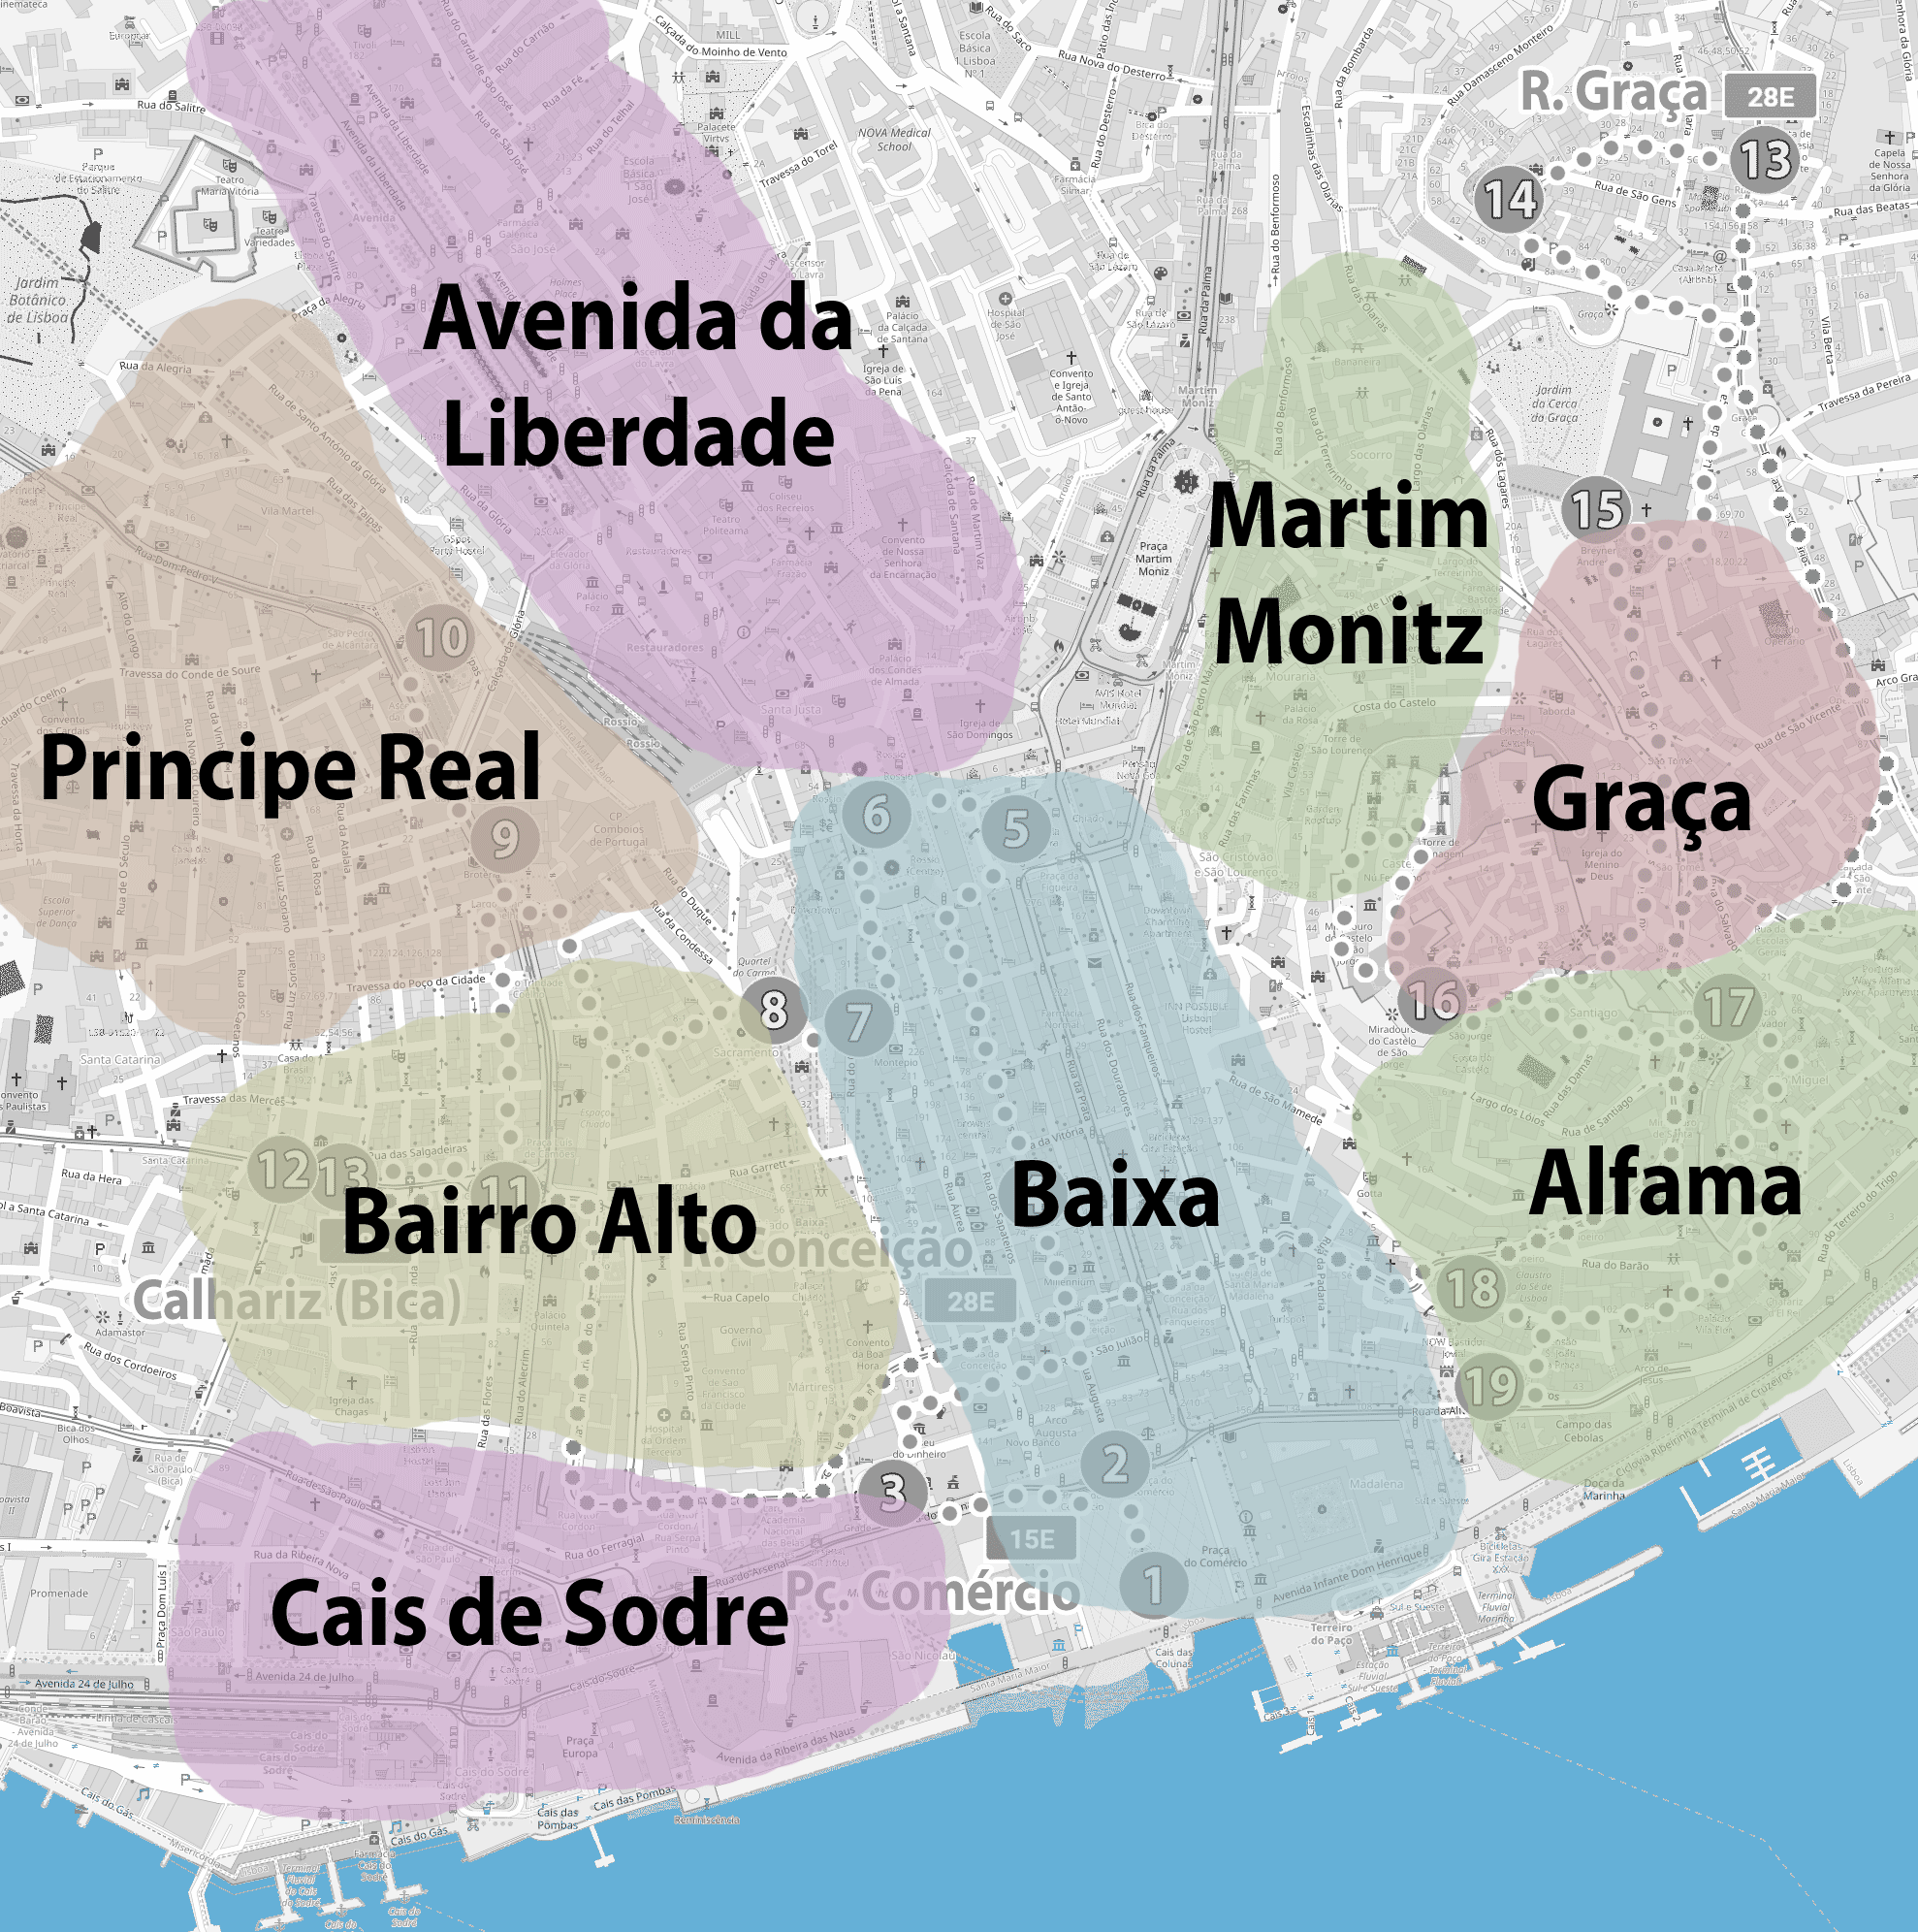 Lizbona Mapa 04 